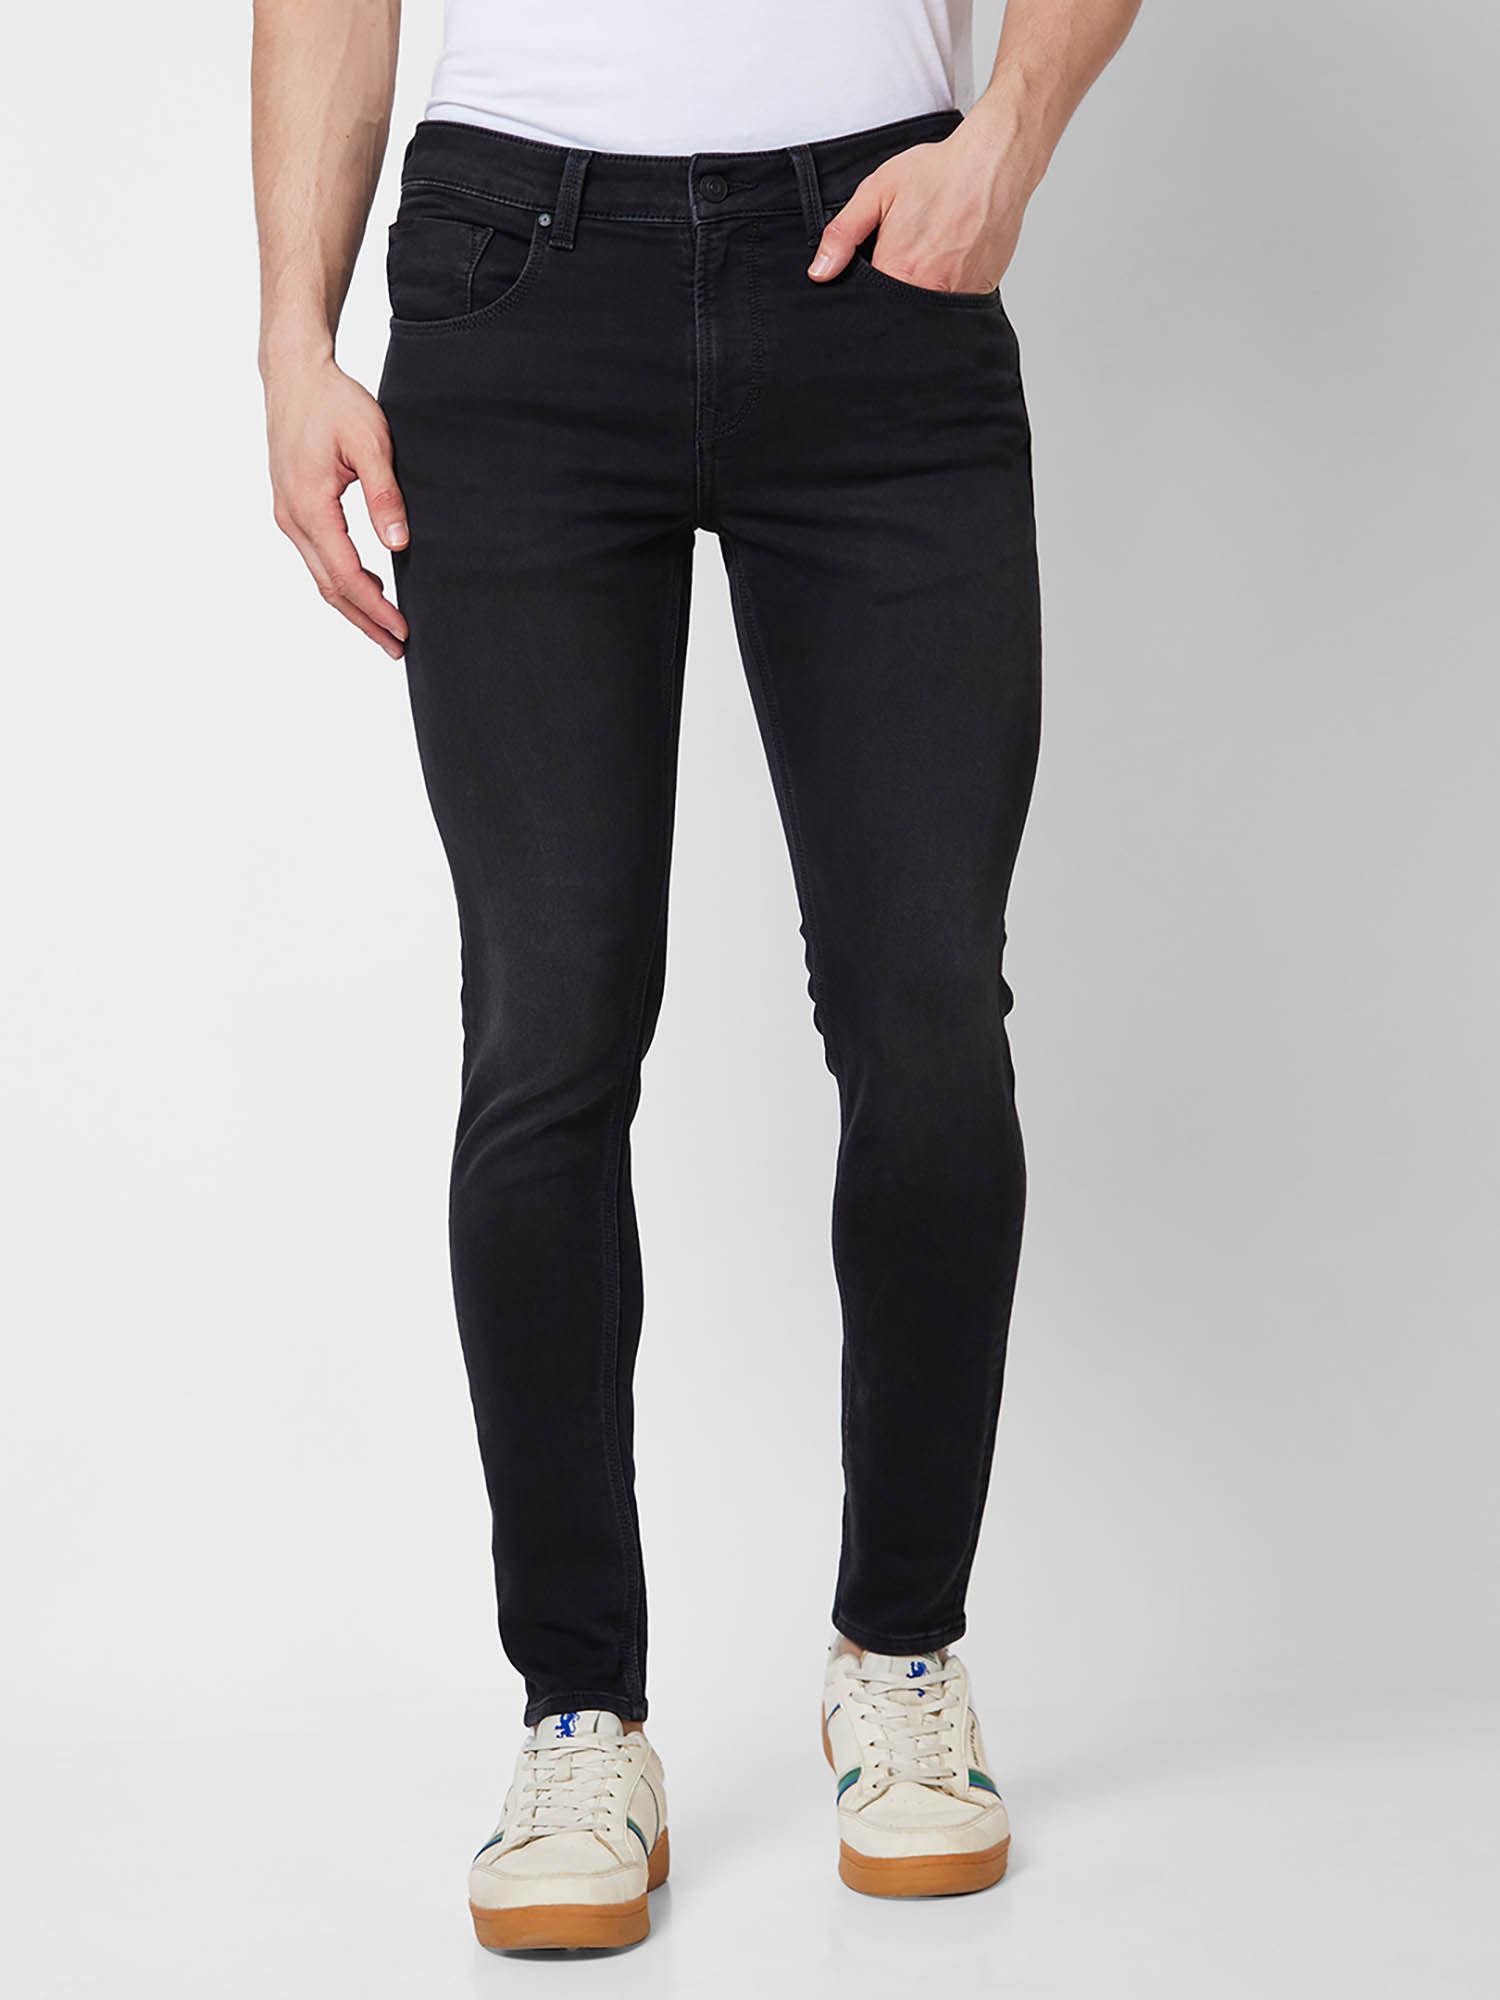 low-rise-super-slim-fit-black-jeans-for-men